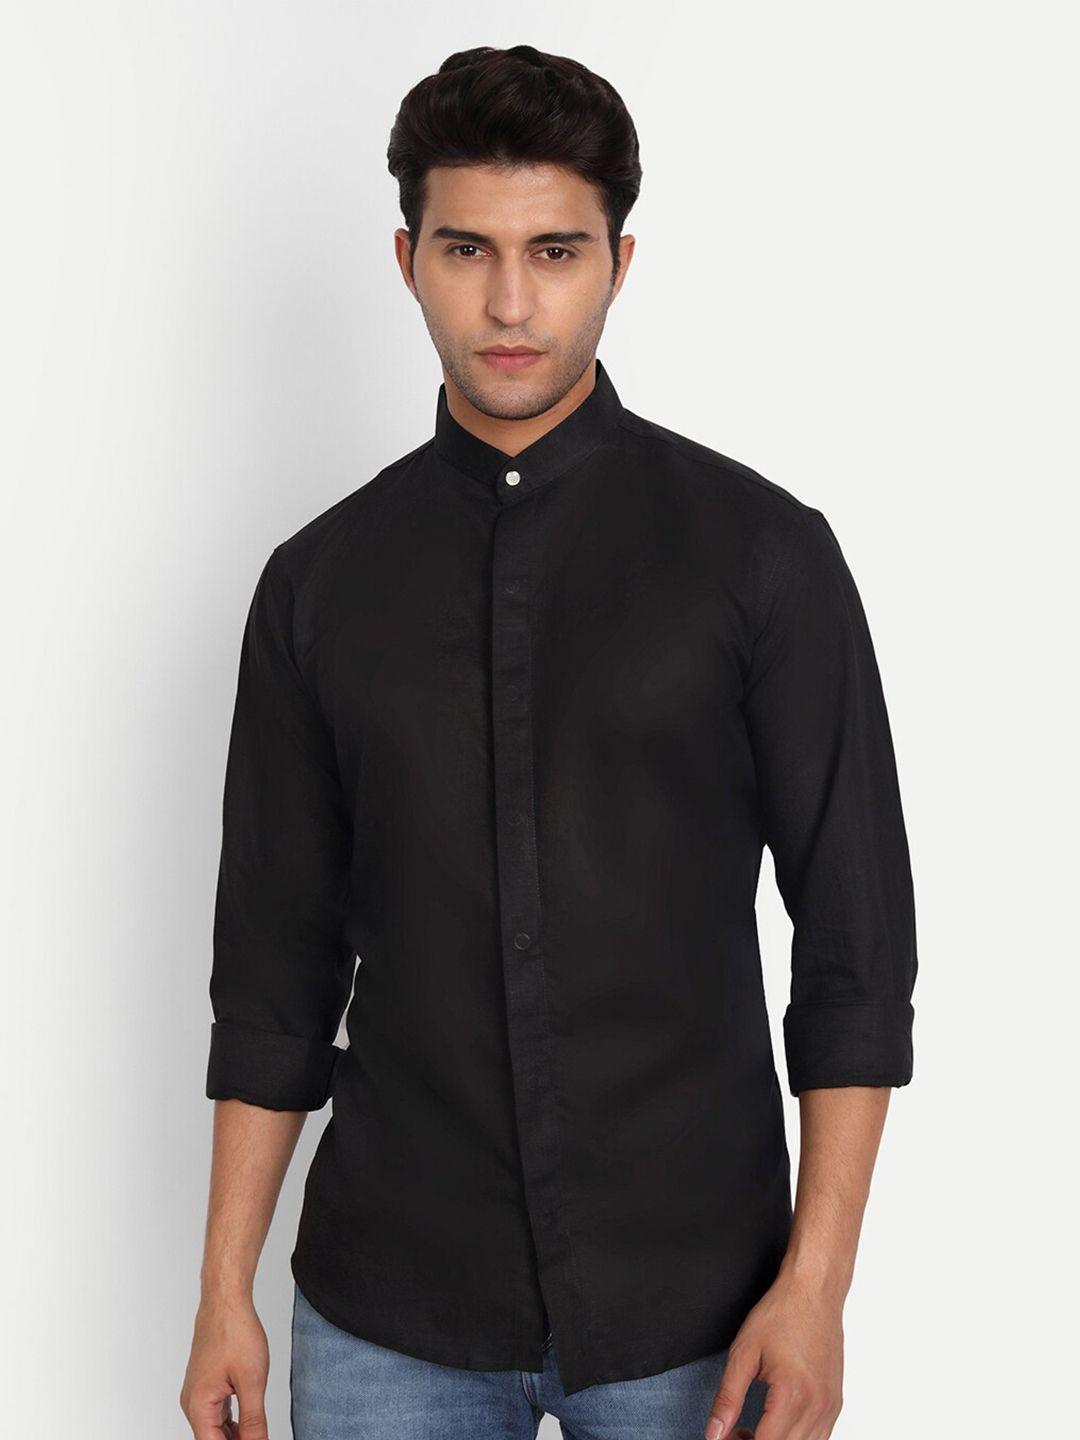 vida loca mandarin collar long sleeves straight slim fit opaque cotton casual shirt